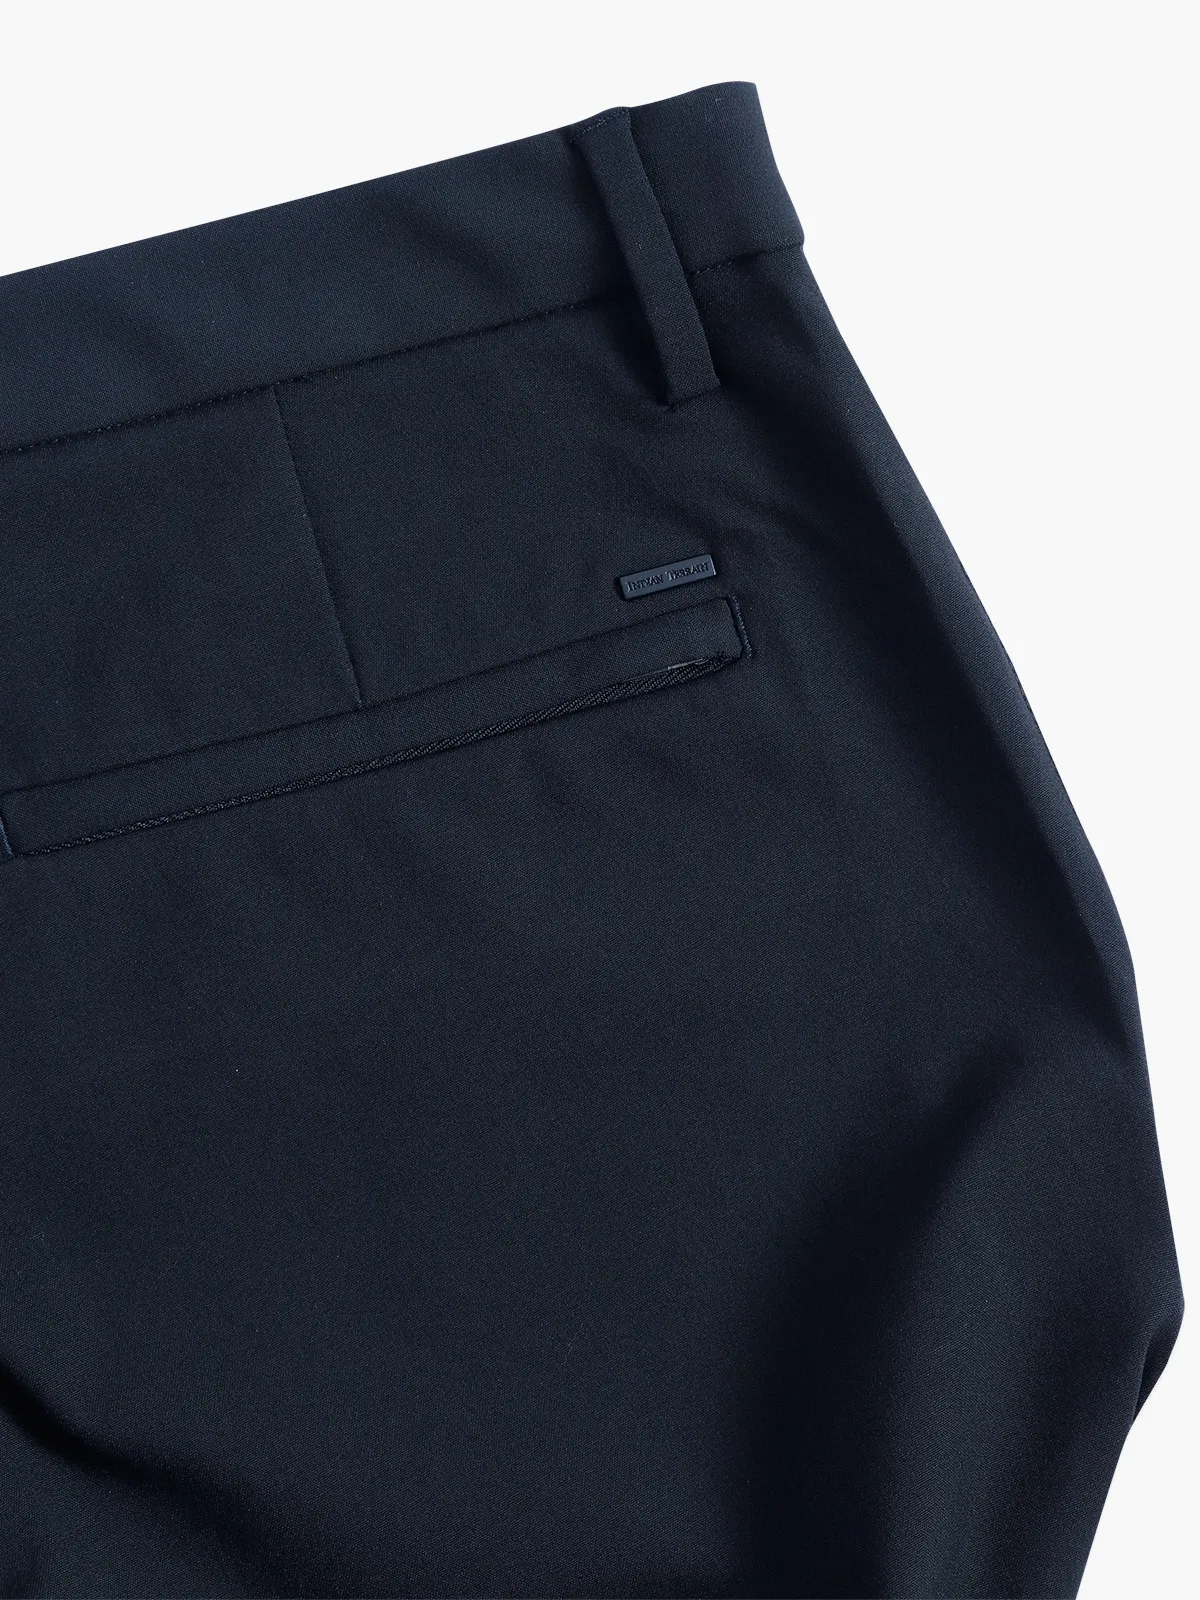 Indian Terrain black urban fit cotton trouser